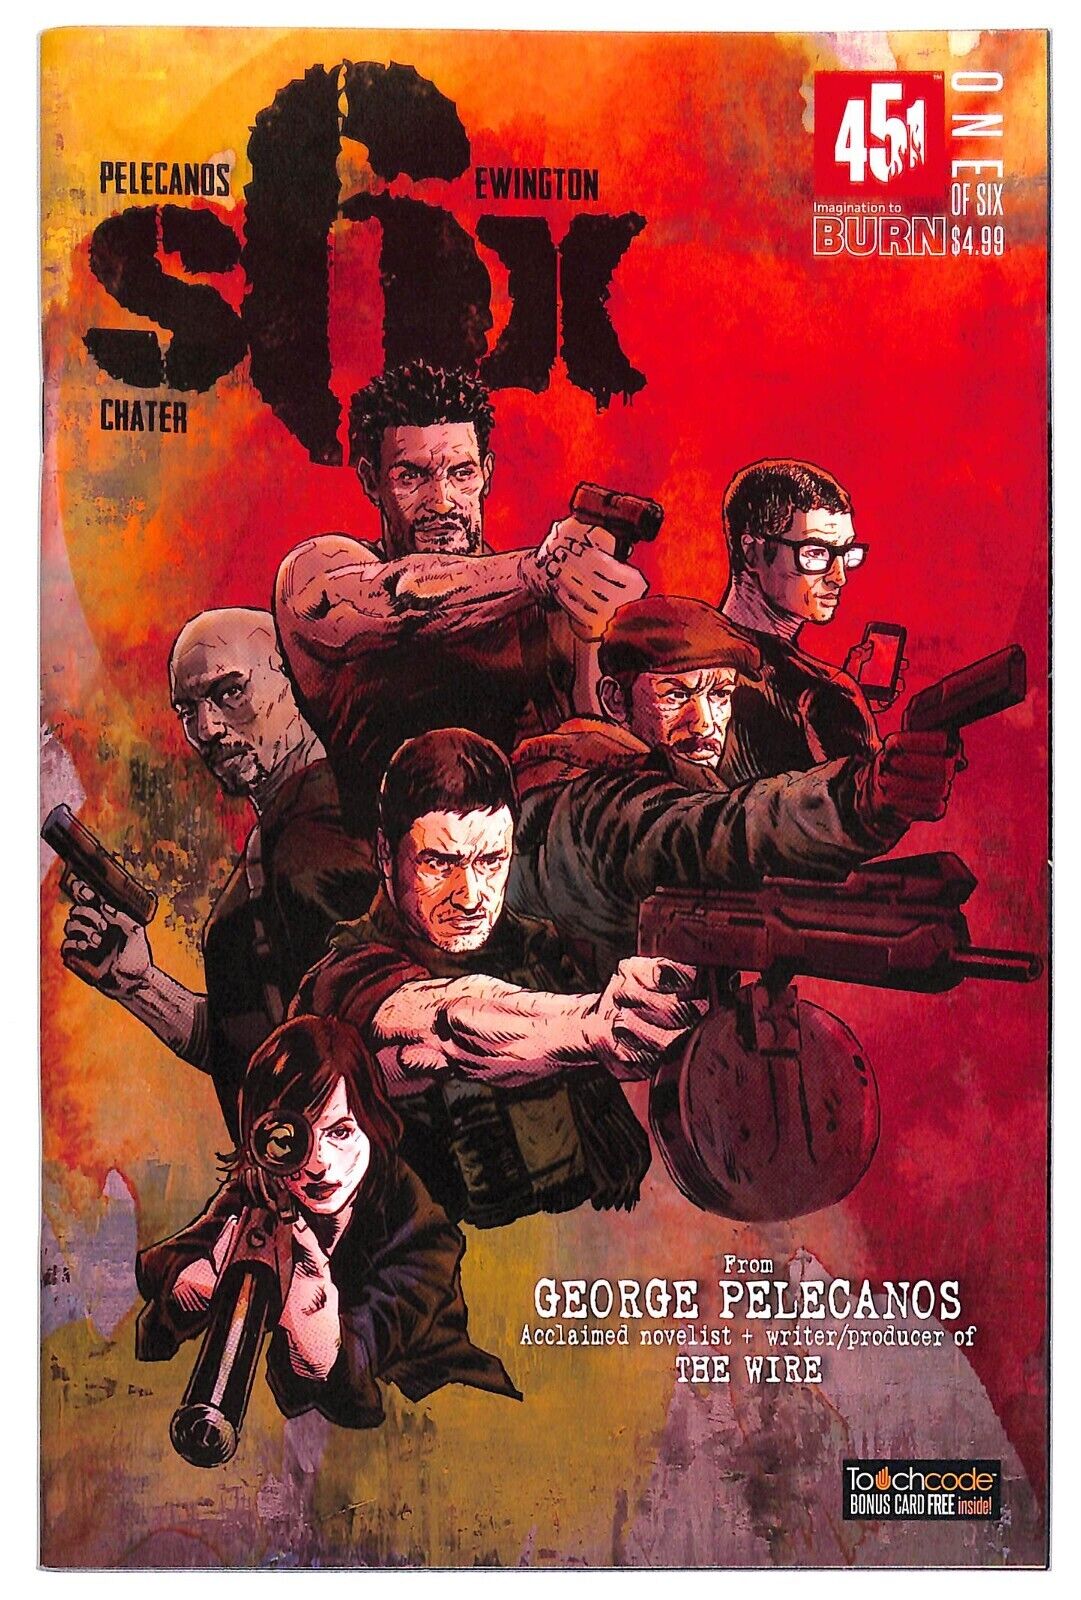 S6X 451 Media Group - Issue #1  by George Pelecanos - Andi Ewington 2015 six